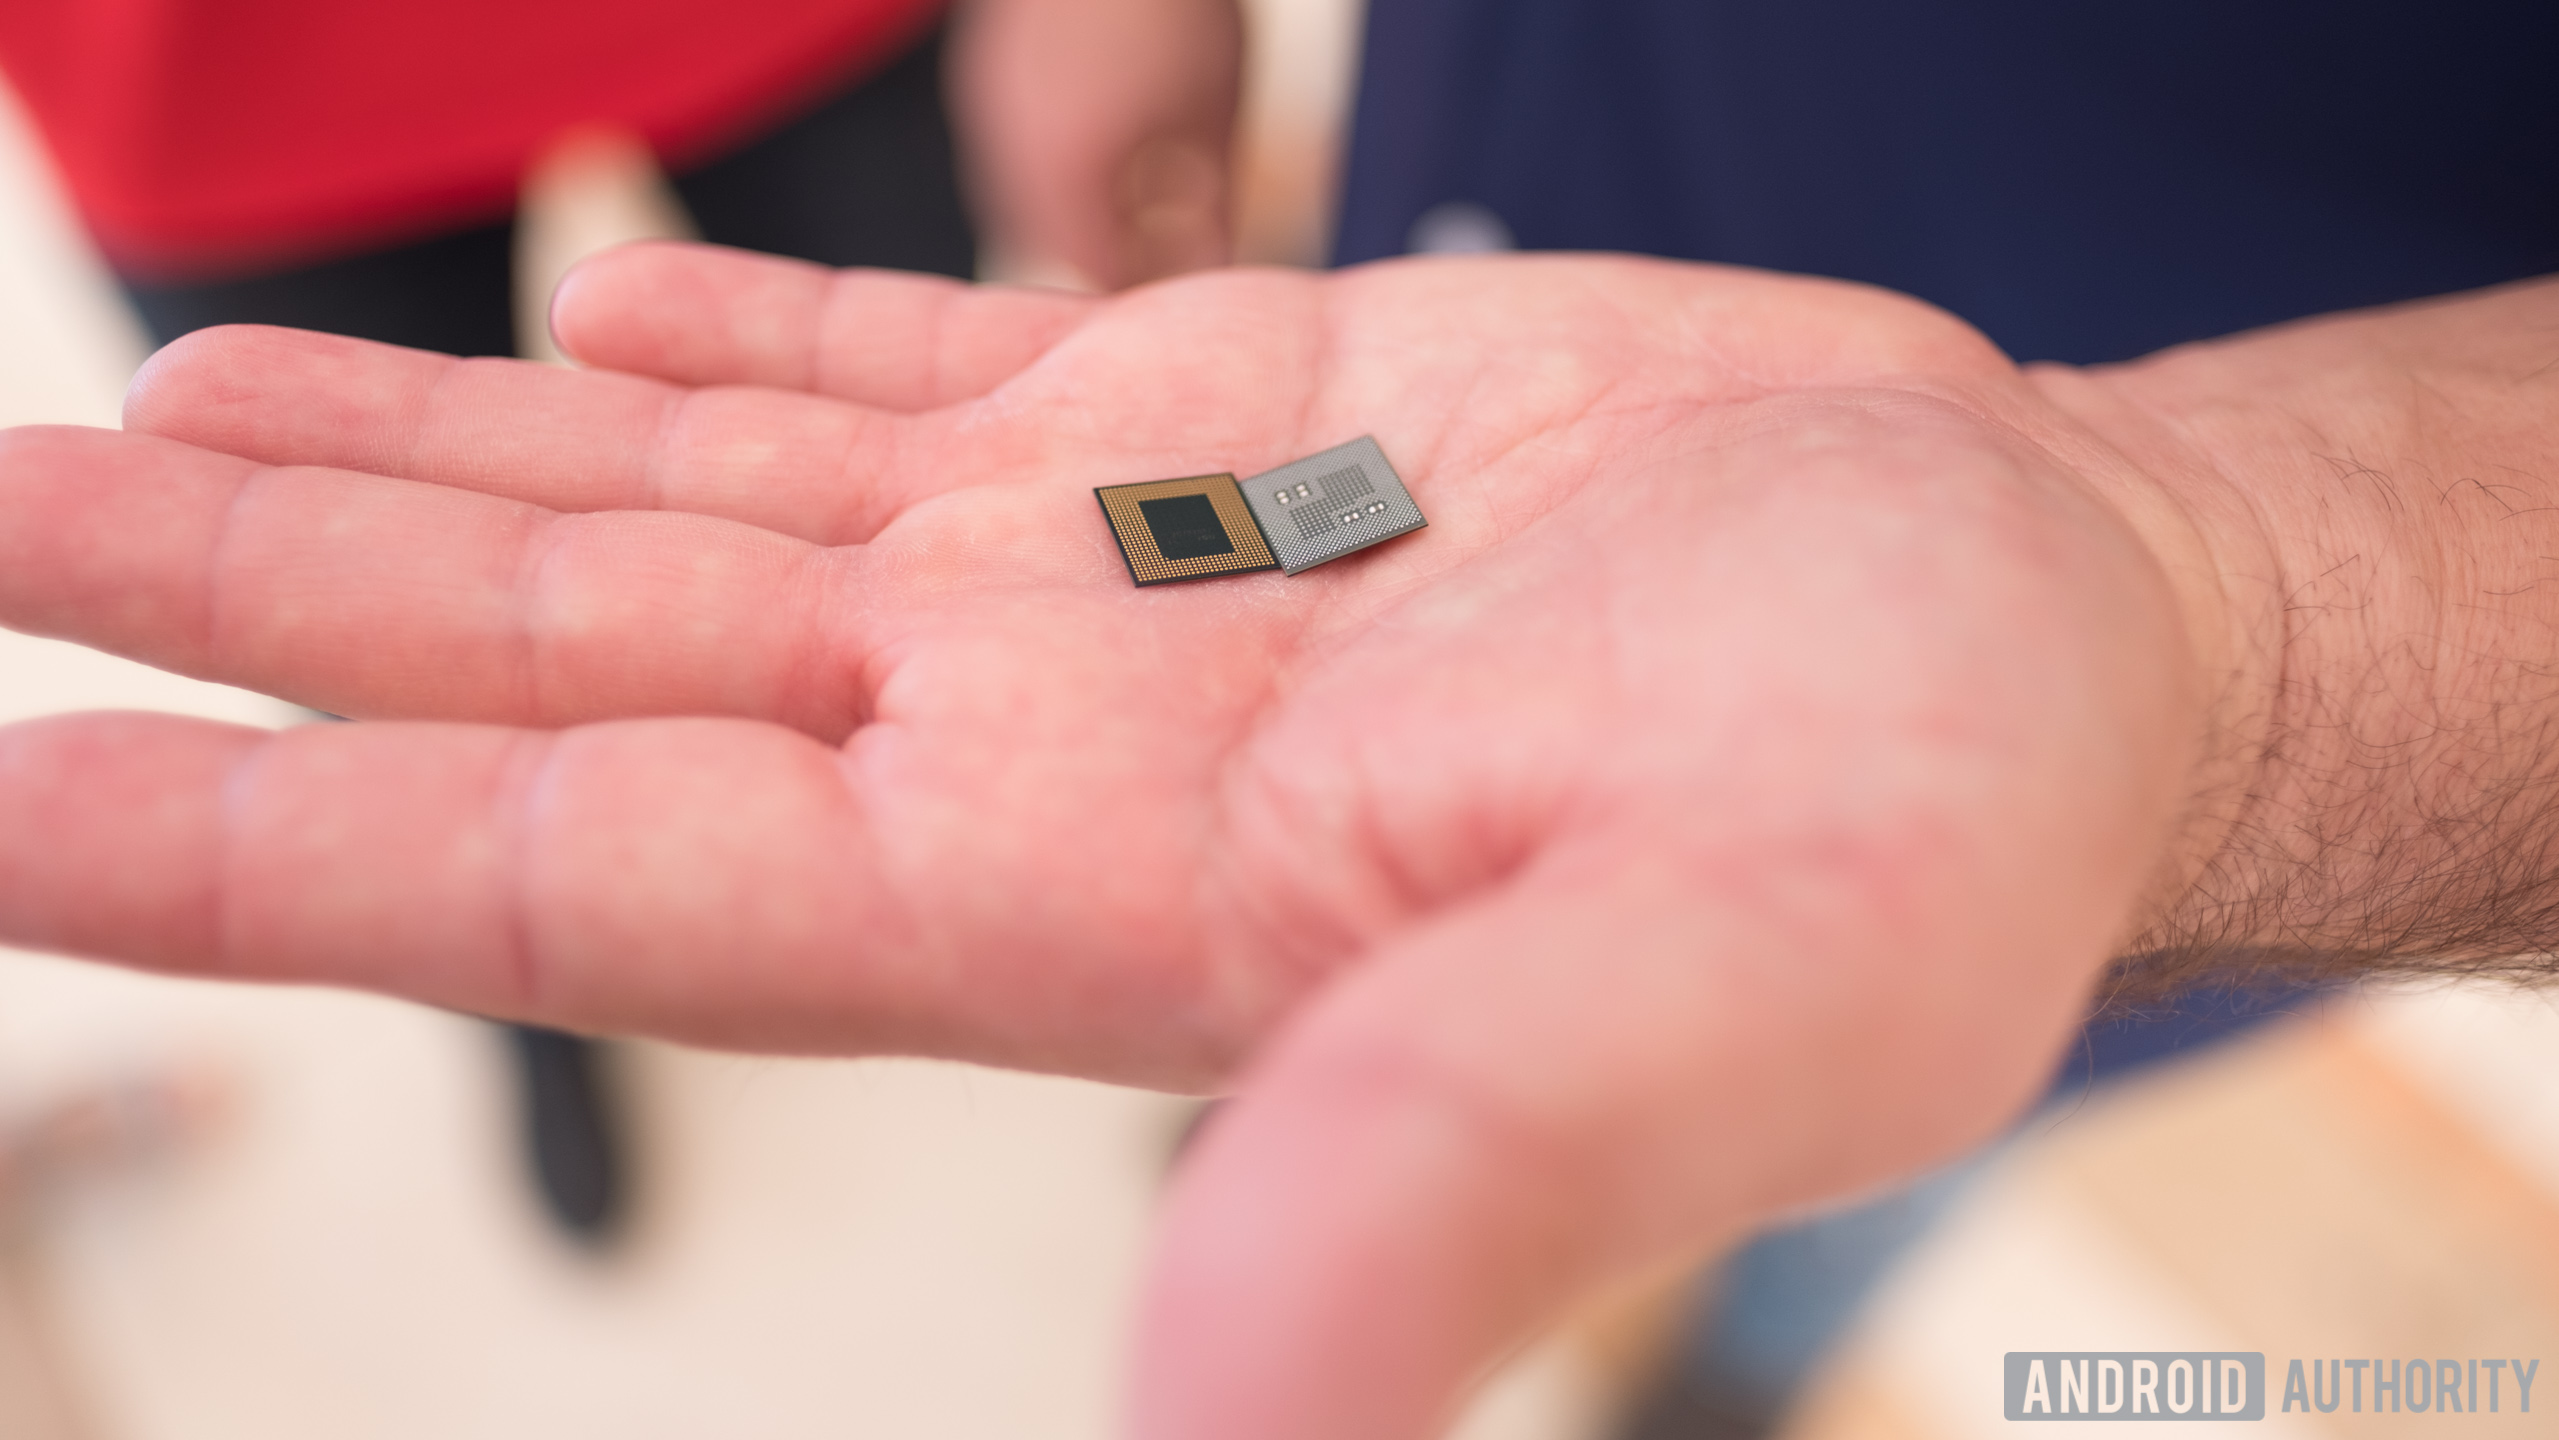 The Snapdragon 845 chipset.